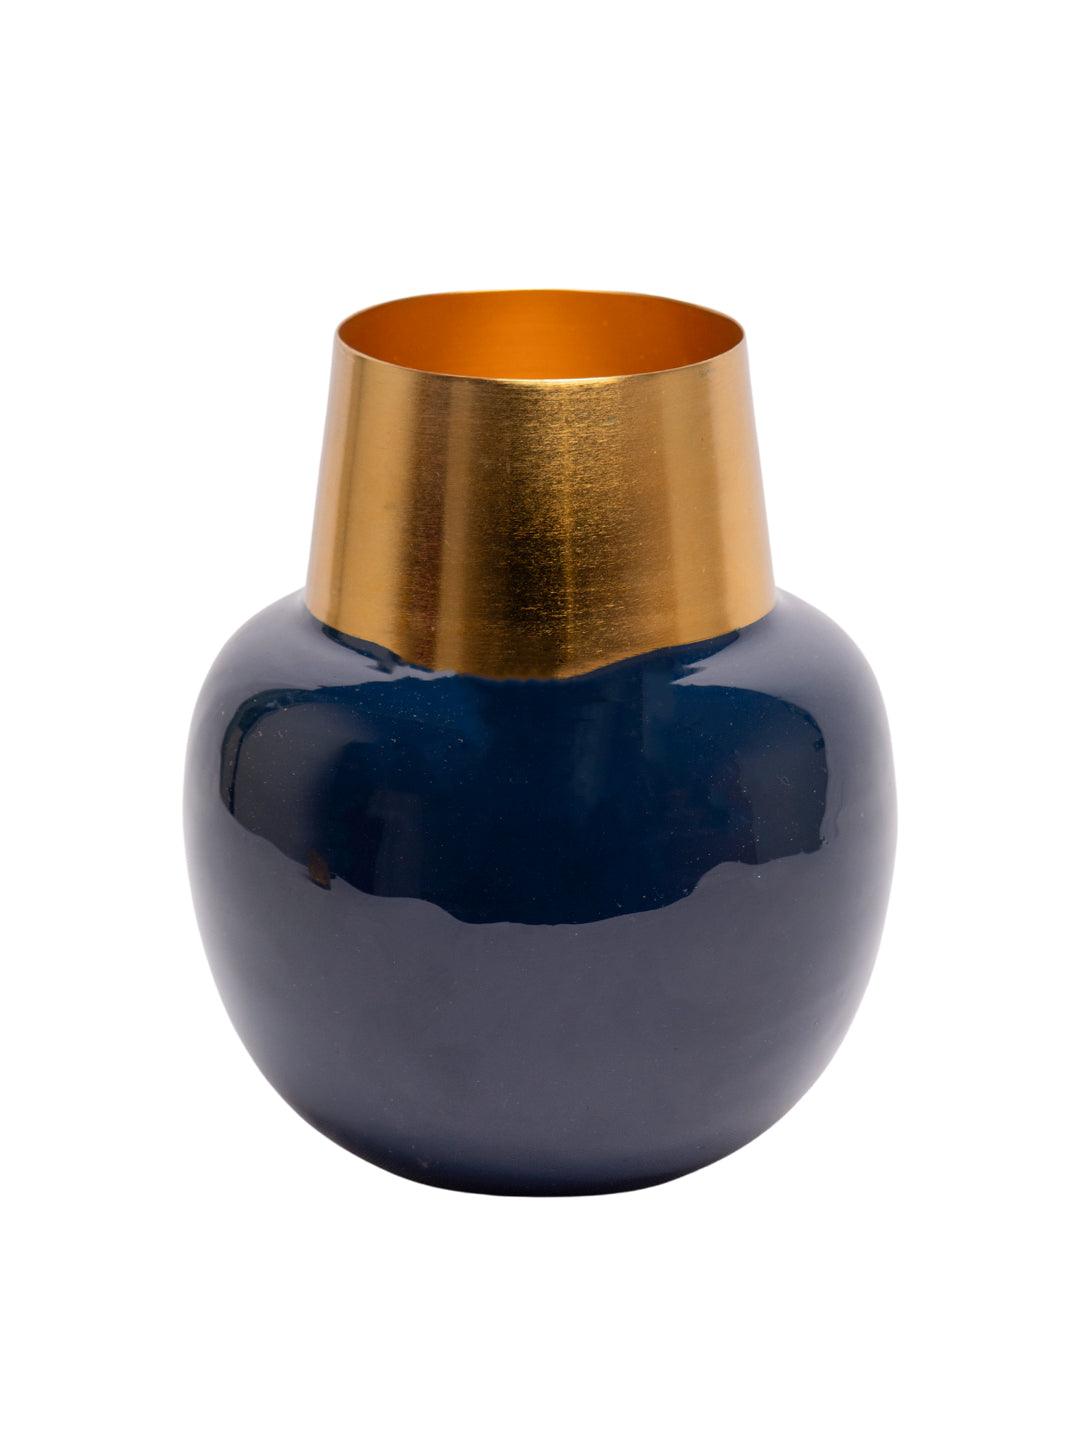 Decorative Enamel Vase - Golden & Blue - MARKET 99